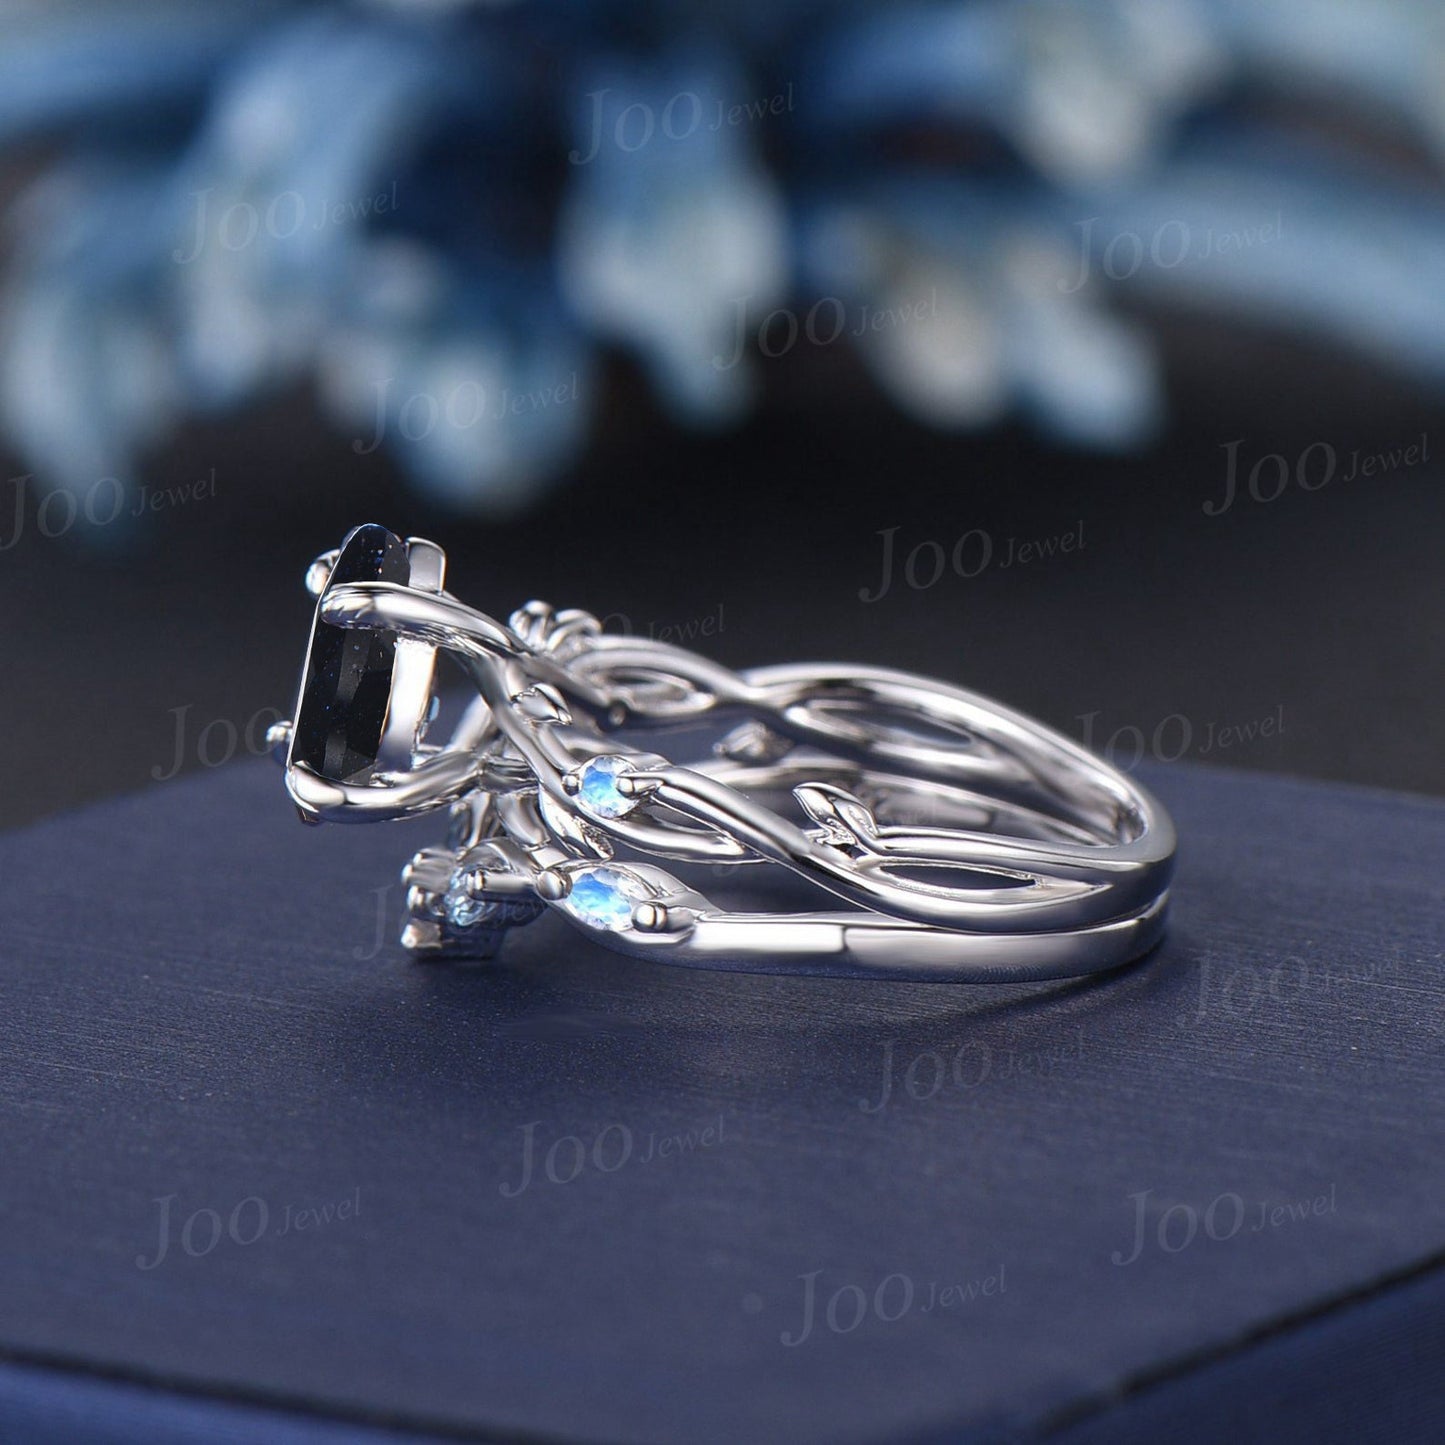 1.25ct Nature Inspired Pear Galaxy Blue Sandstone Moonstone Bridal Set Unique Twig Vine Teardrop Blue Goldstone Alexandrite Wedding Ring